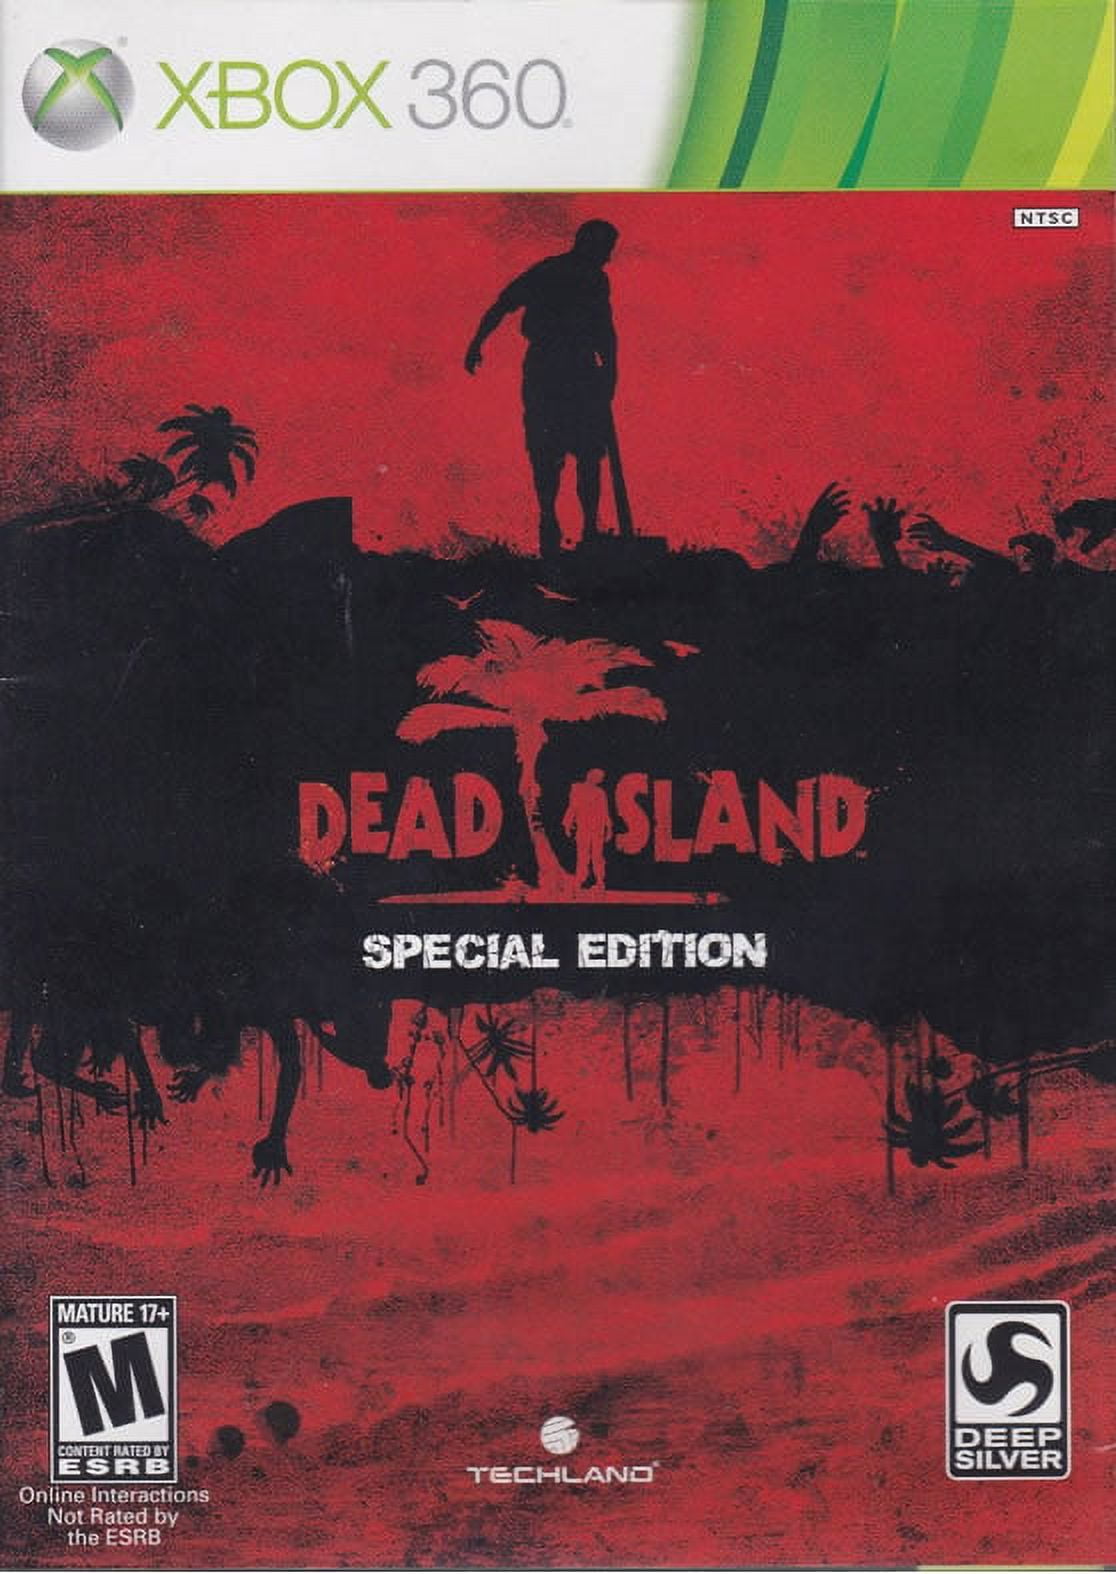 Dead Island: Definitive Edition, Software